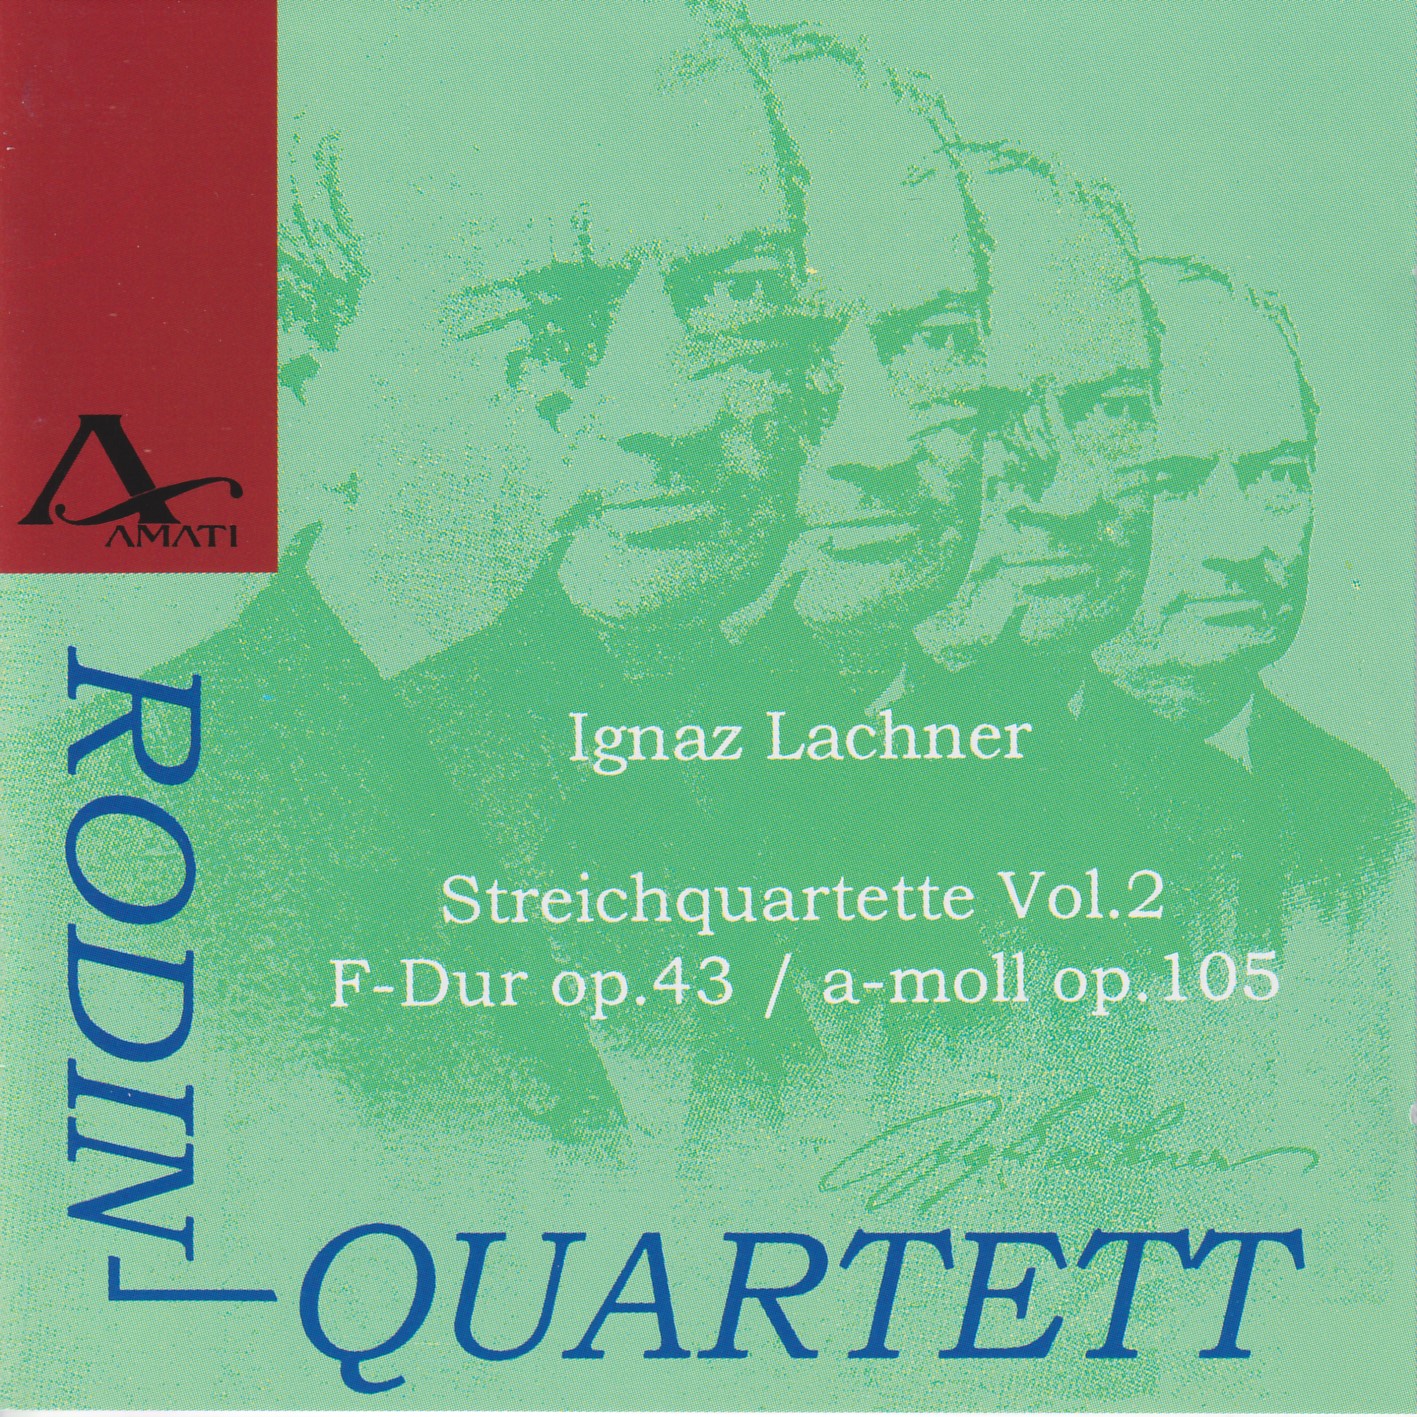 Ignaz Lachner - Streichquartette Vol.2